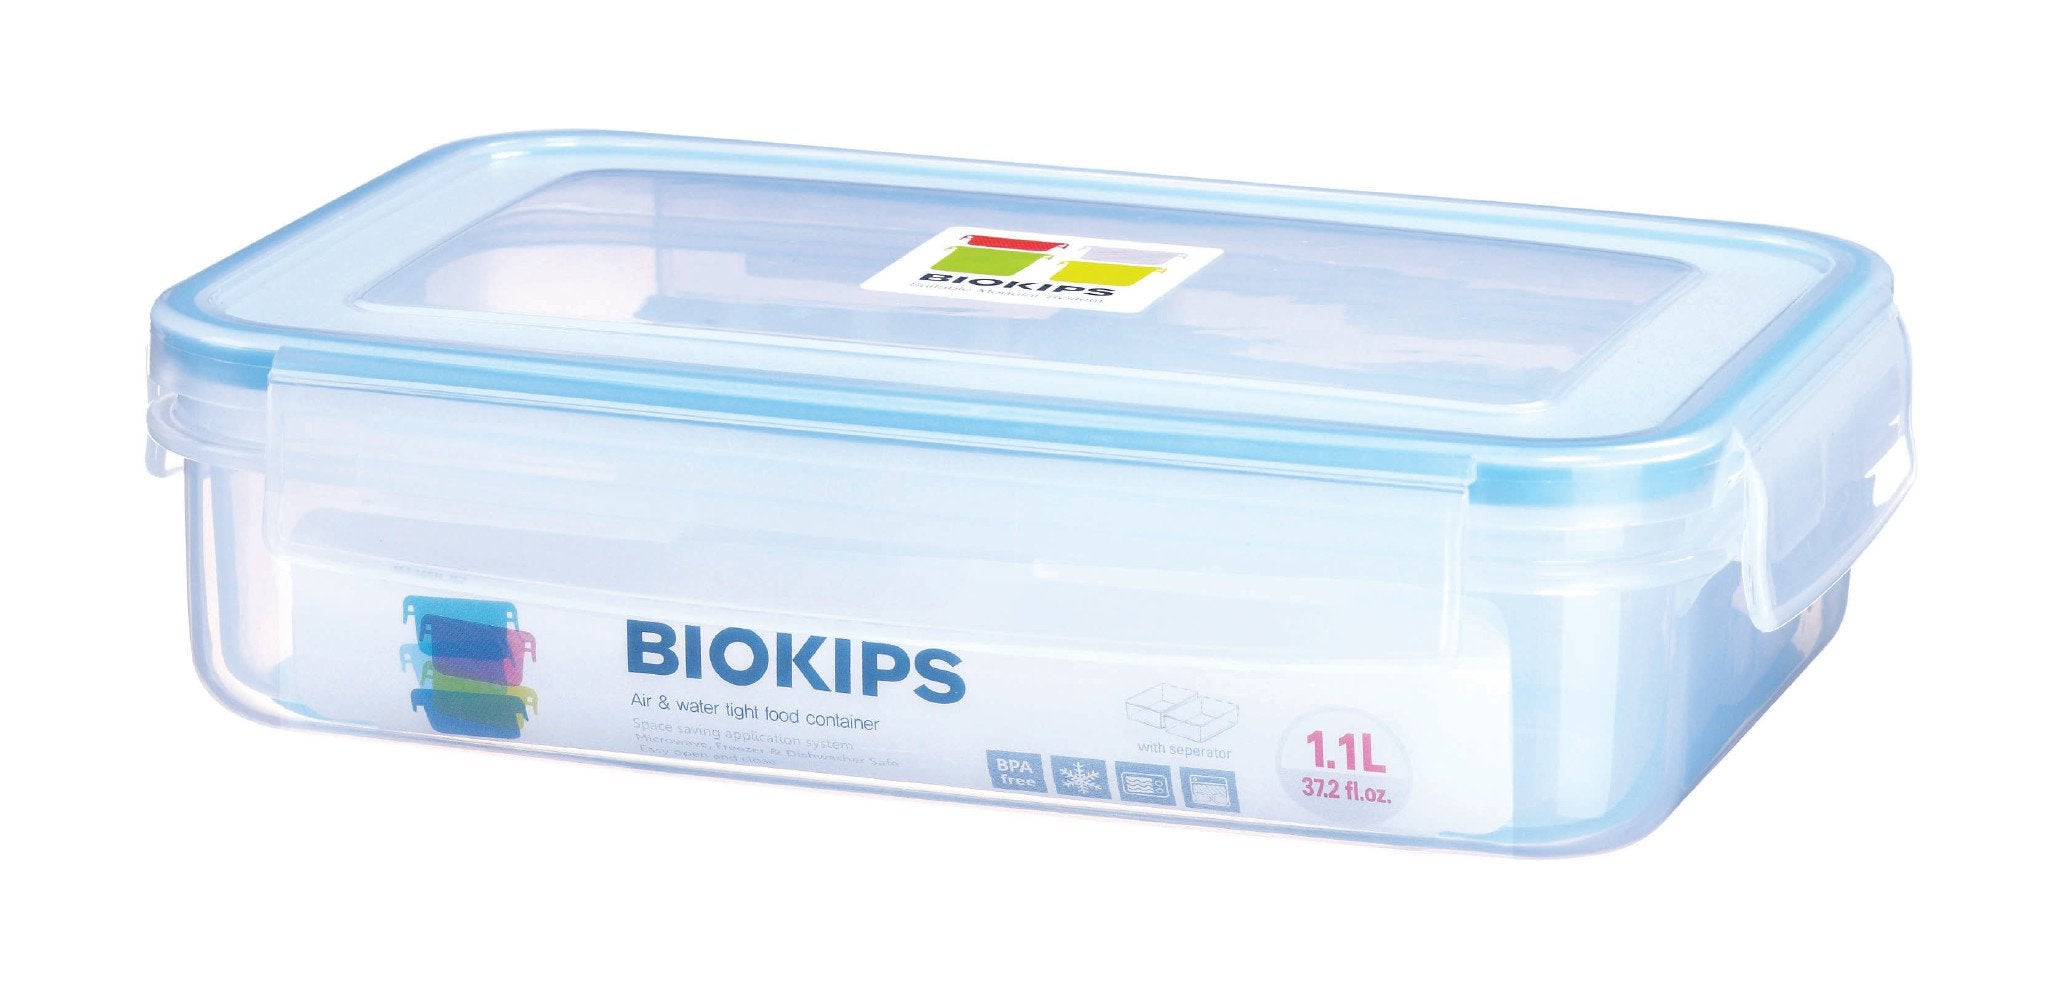 Komax Biokips Rectangular Food Storage Container With Separator, 1.1 L